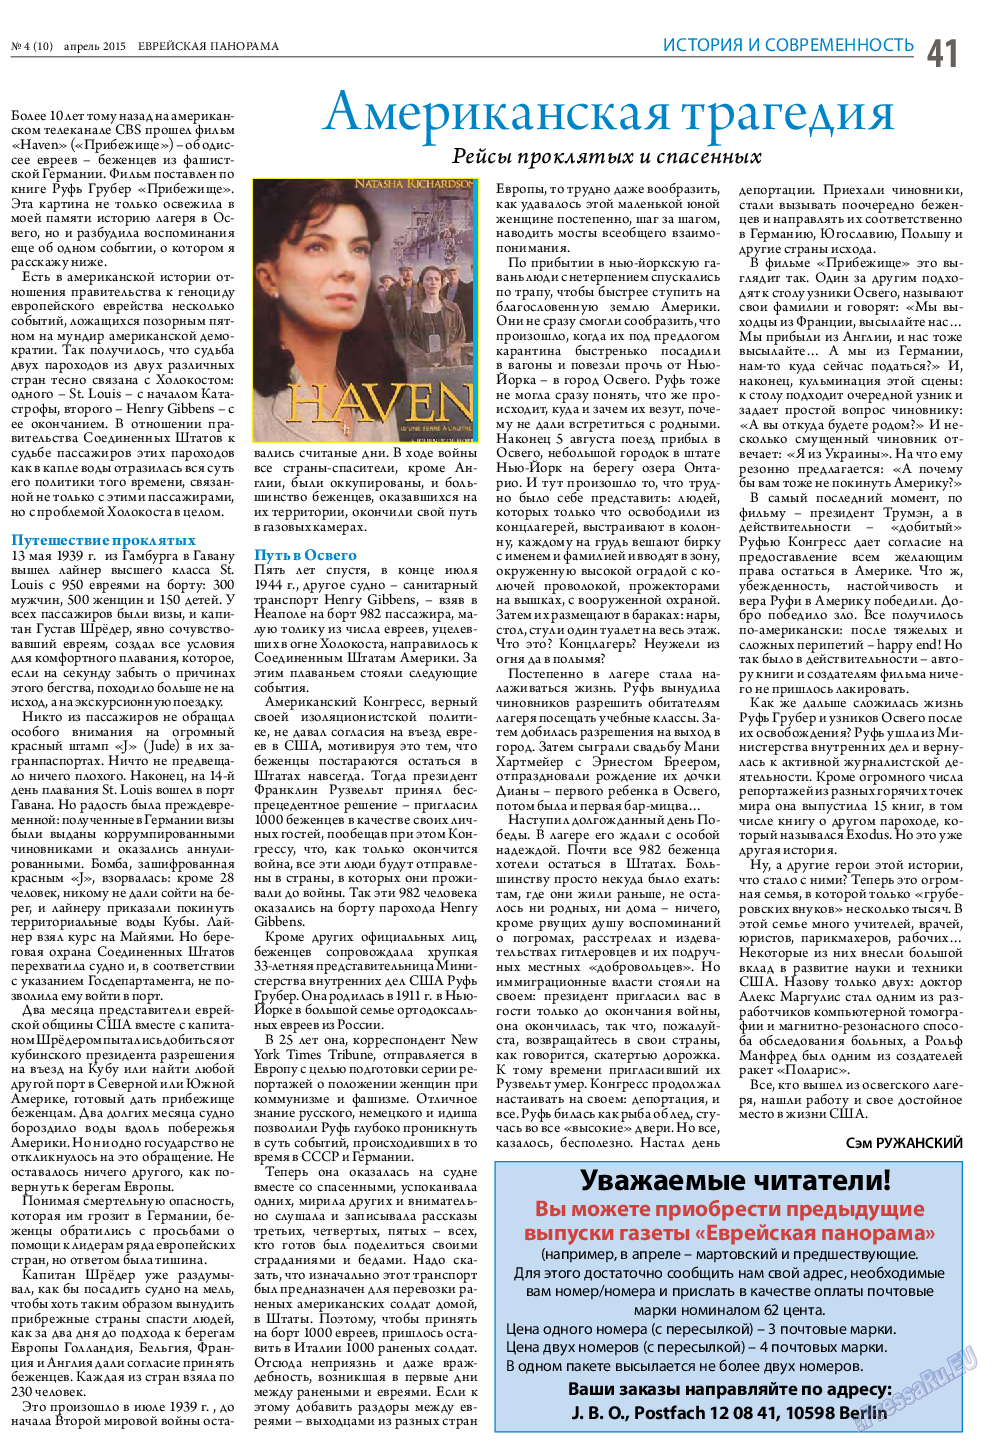 Еврейская панорама, газета. 2015 №4 стр.41